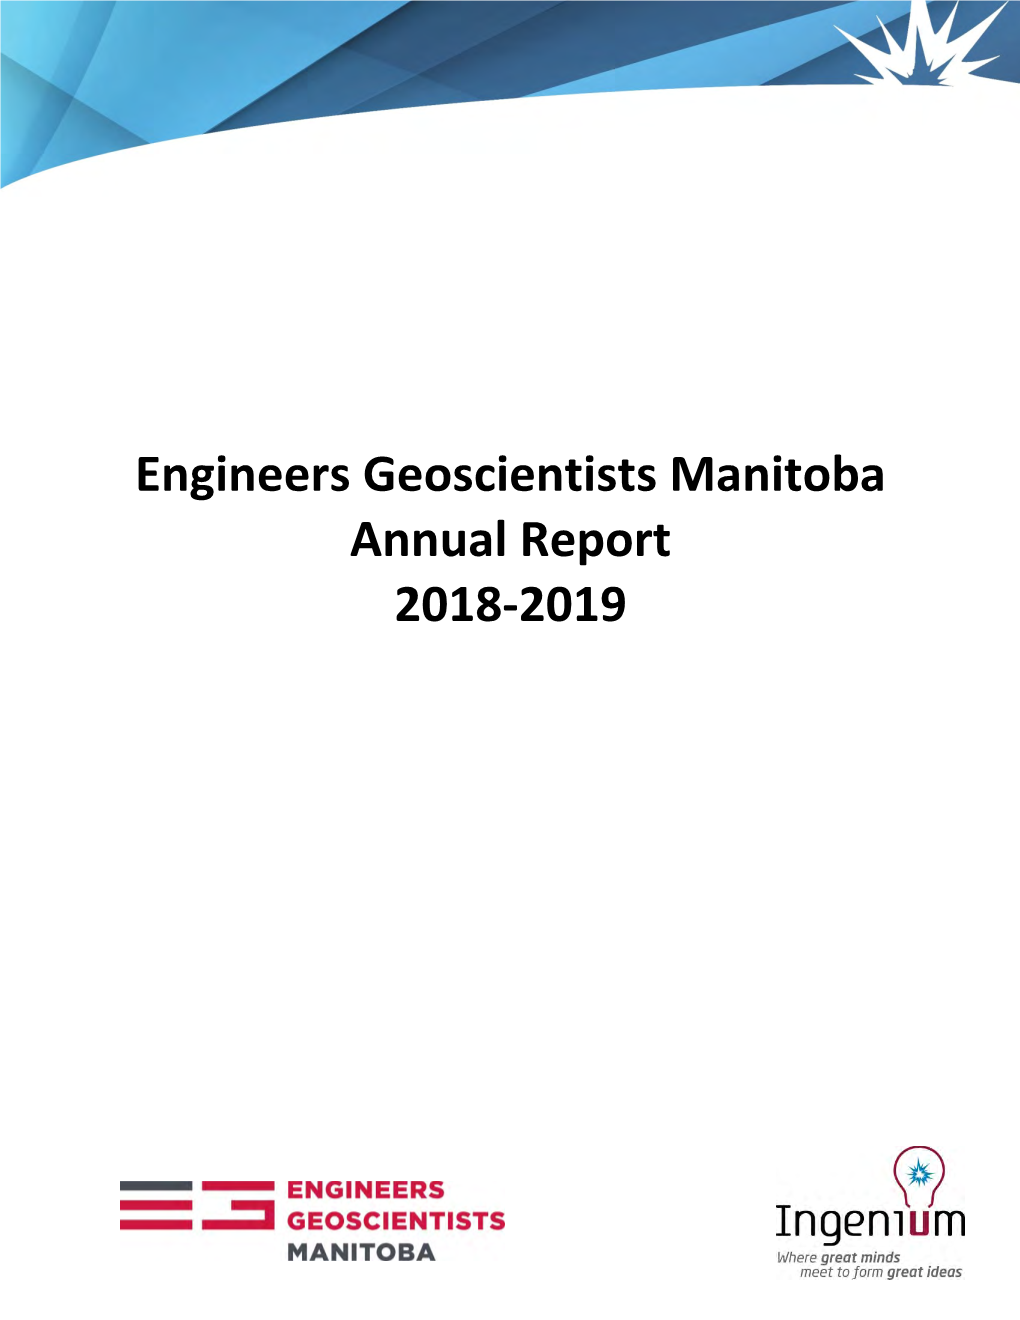 Engineers Geoscientists Manitoba Annual Report 2018-2019